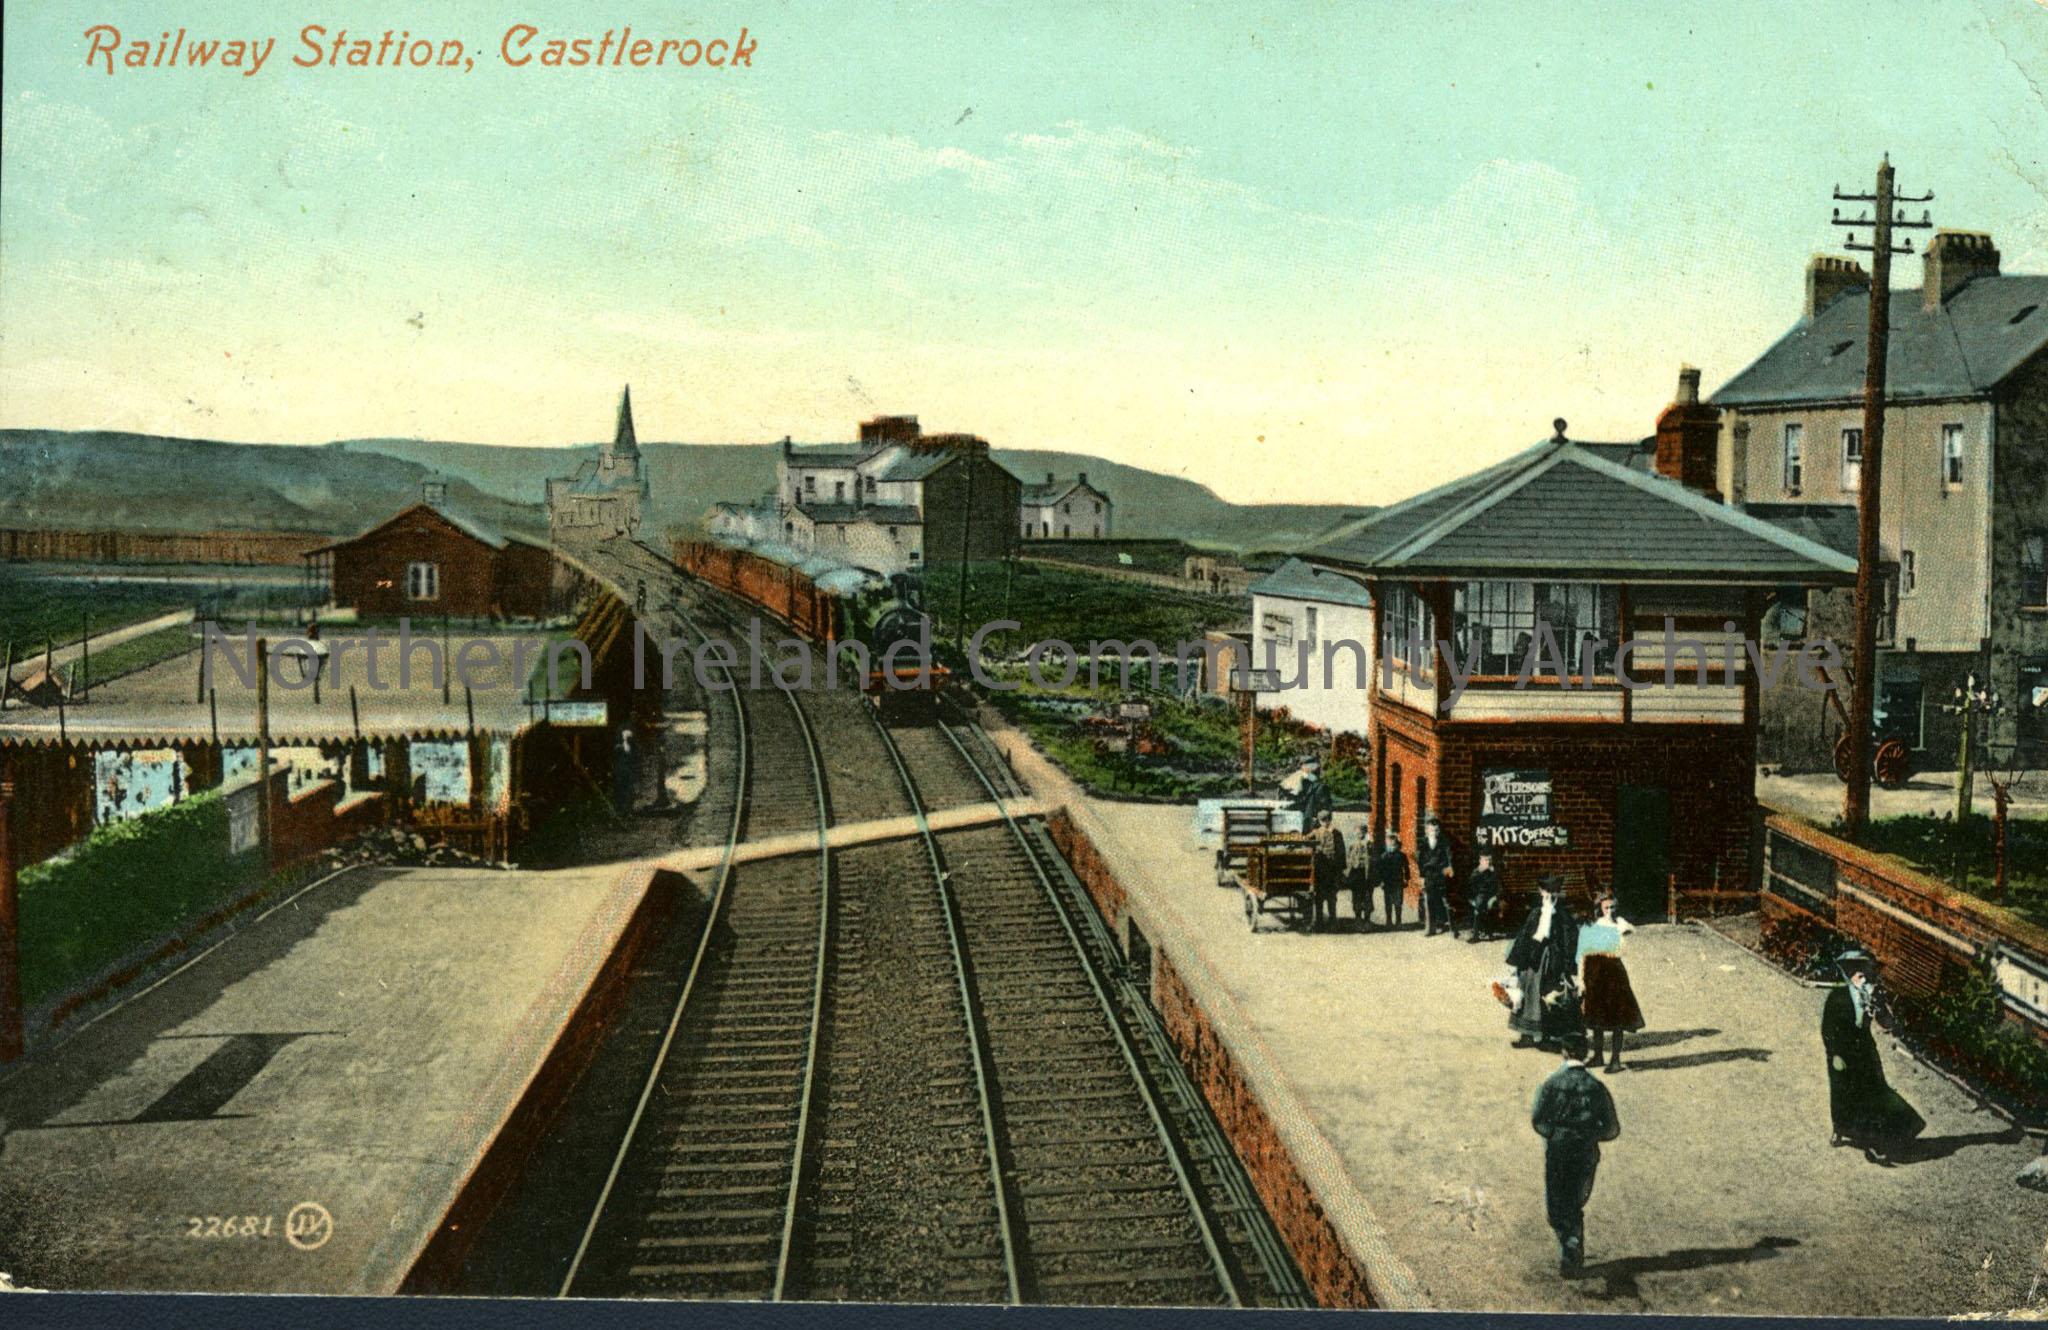 Railway Station, Castlerock. (Colour) Dated 1910.